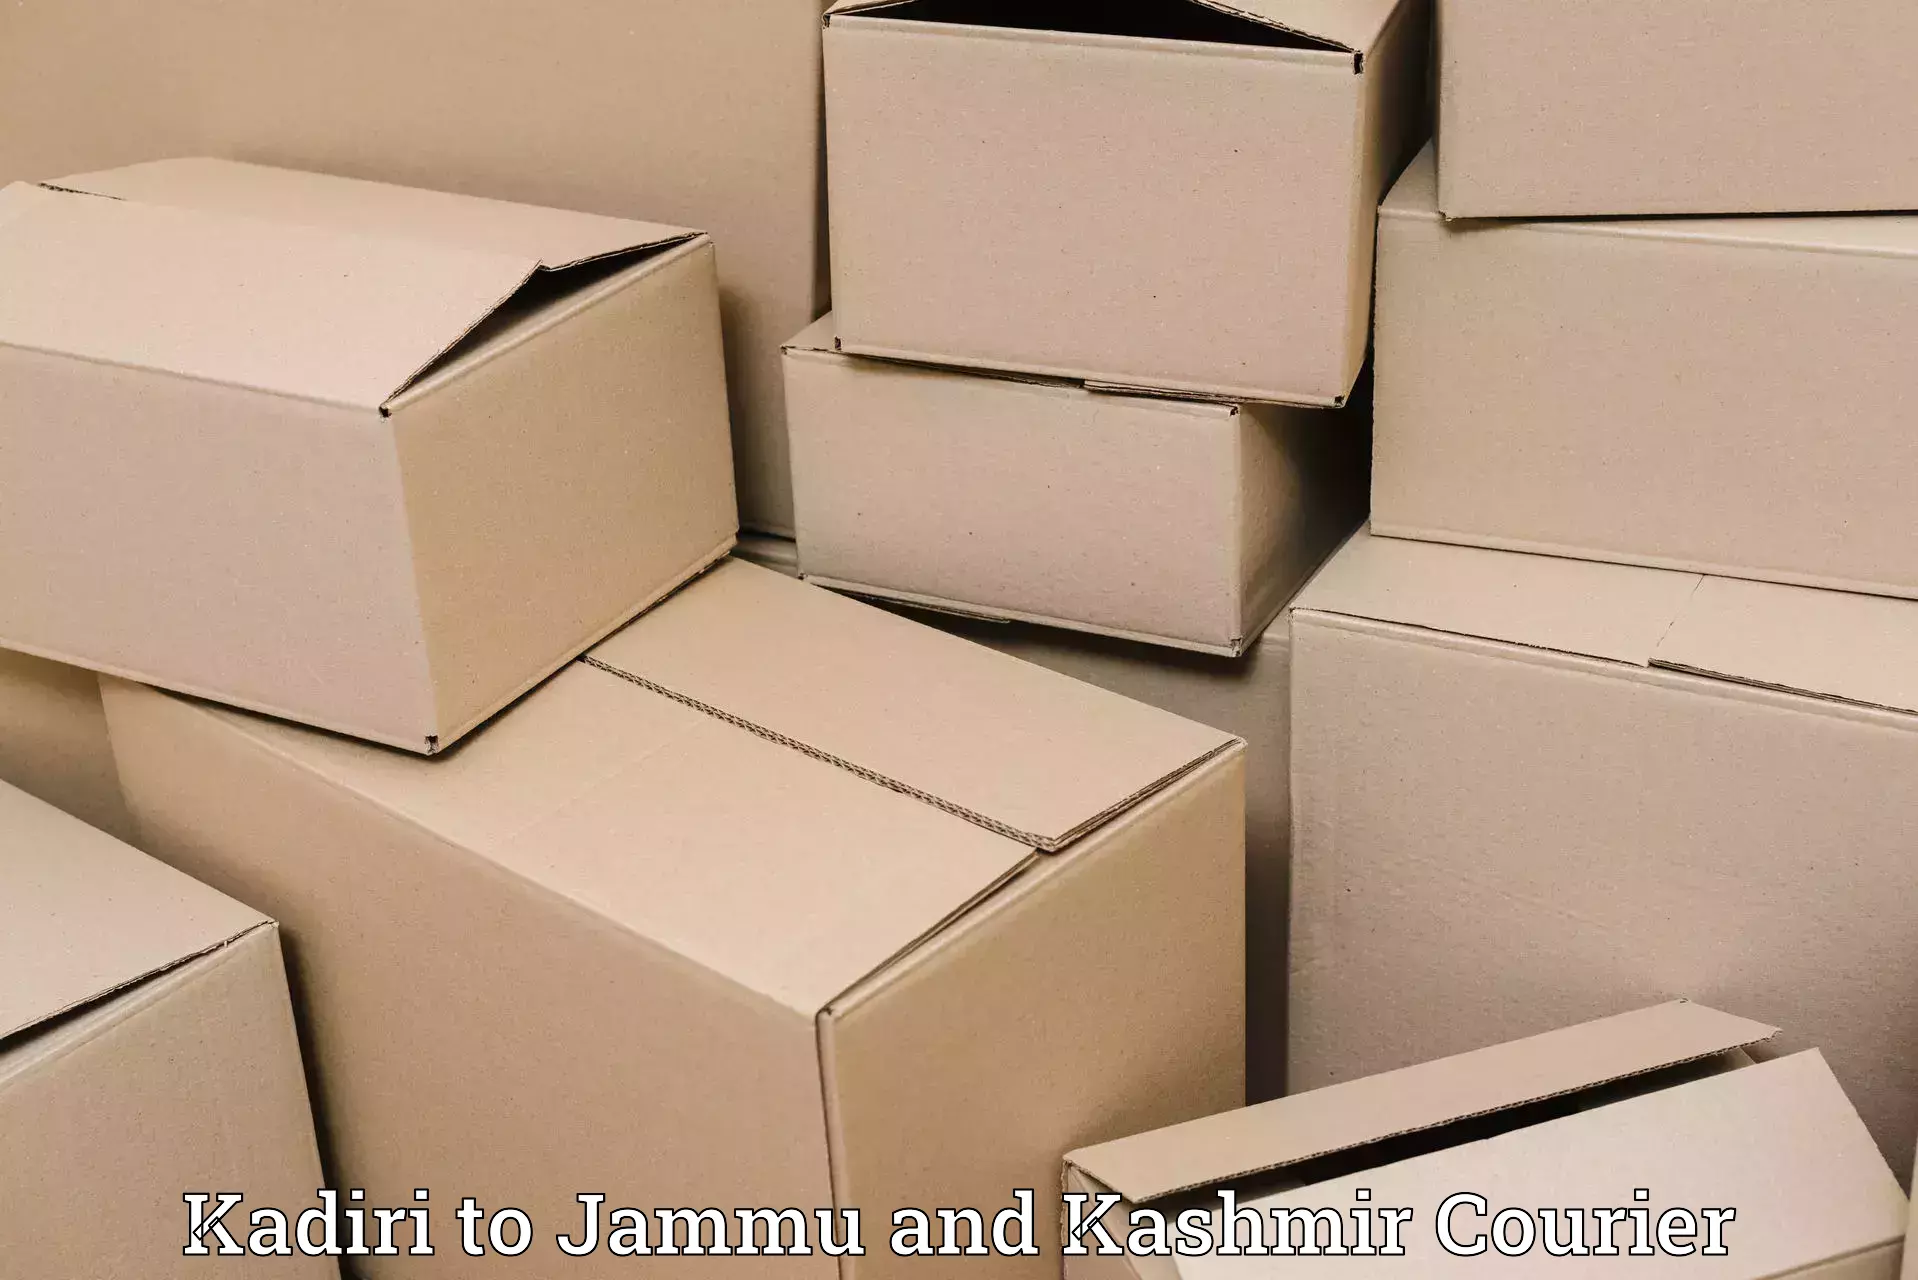 Seamless shipping experience Kadiri to Ramban